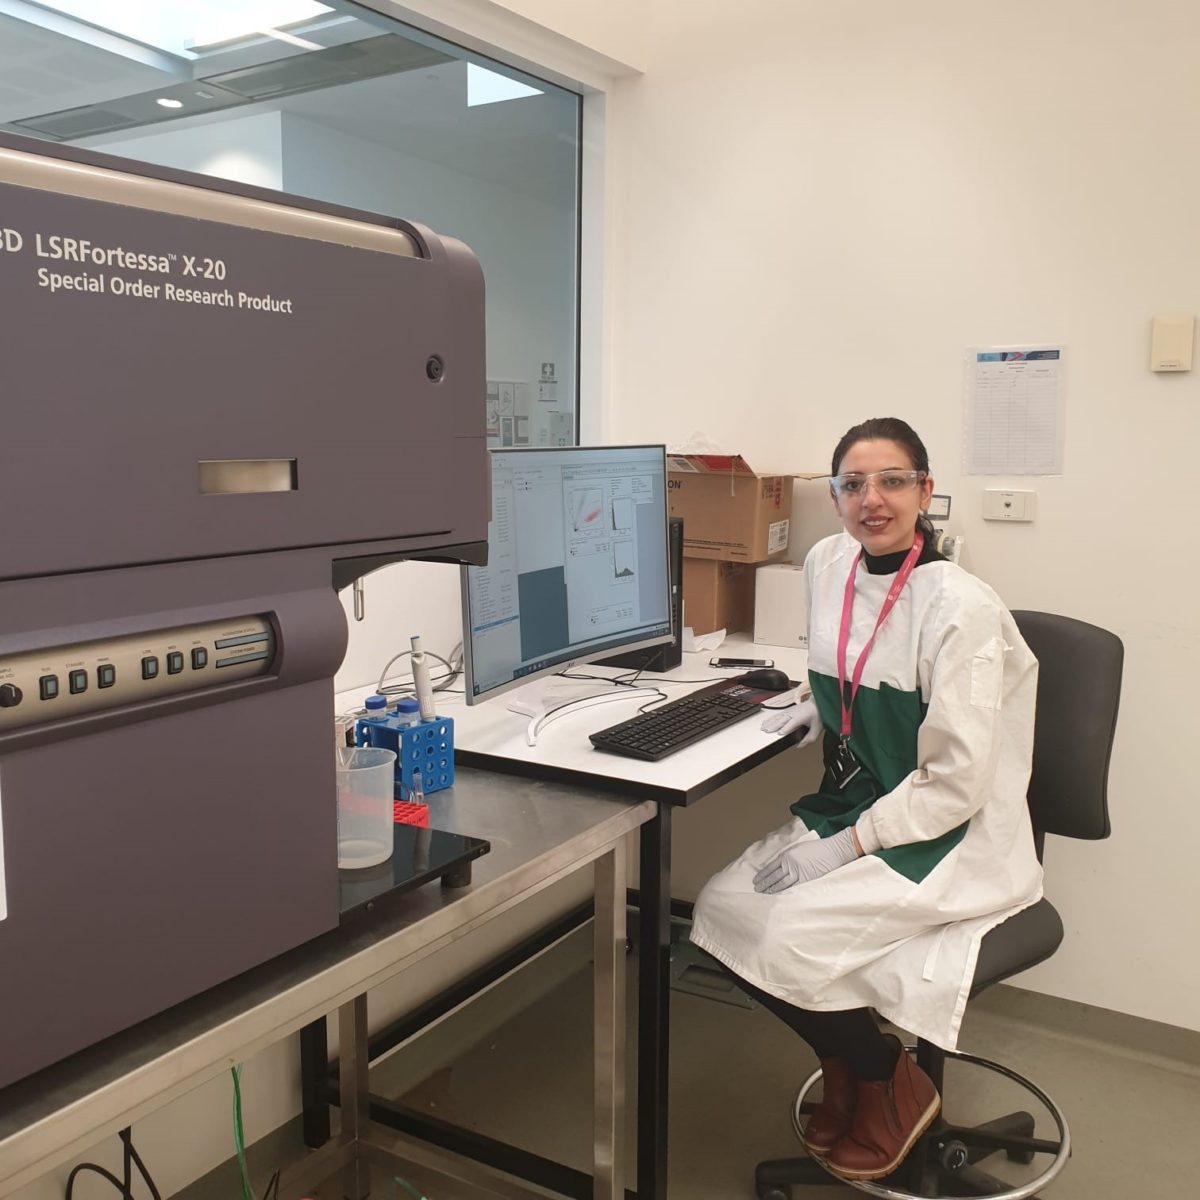 Parinaz Ahangar in lab coat at desk